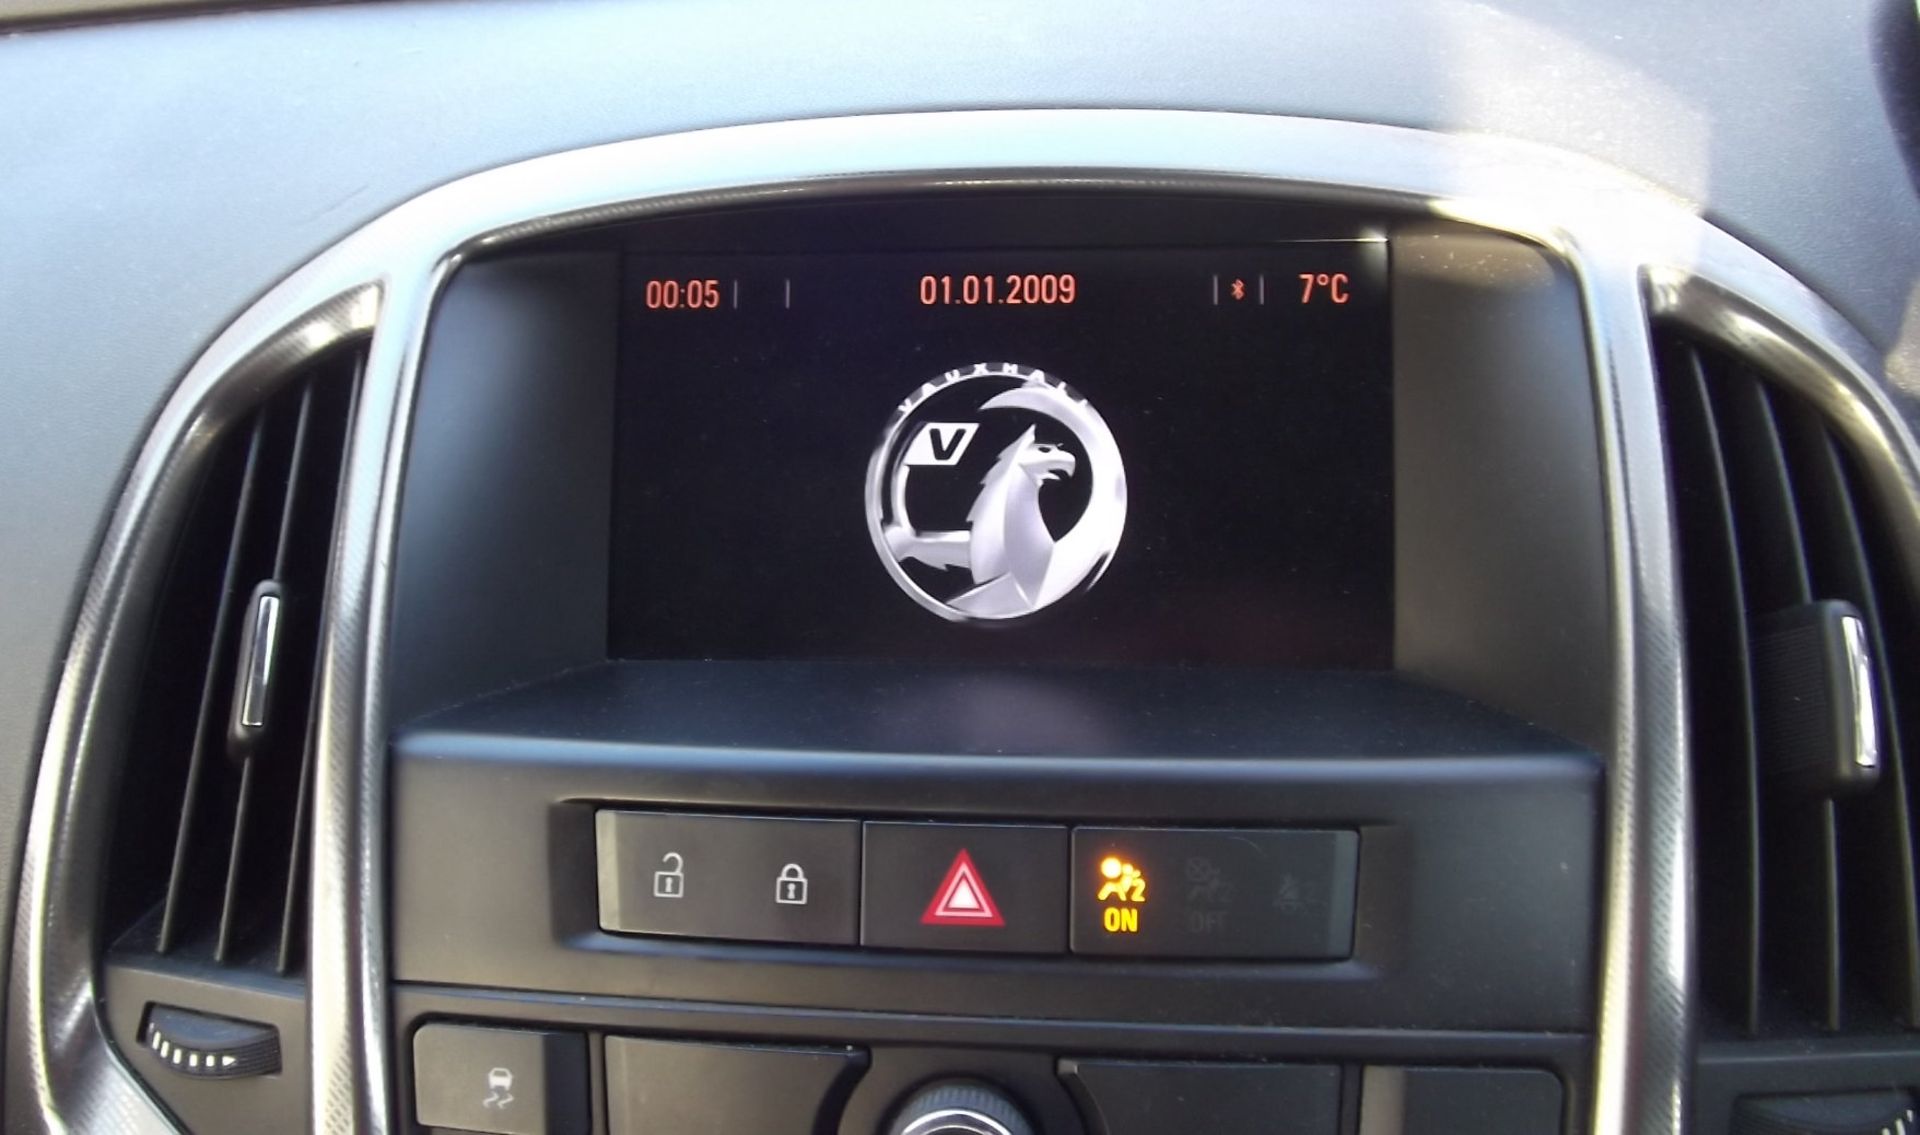 2011 Vauxhall Astra SE 1.6 Automatic 5 Door Hatchback - 97,000 Miles - Sat Nav, Dab Radio, Bluetooth - Image 12 of 17